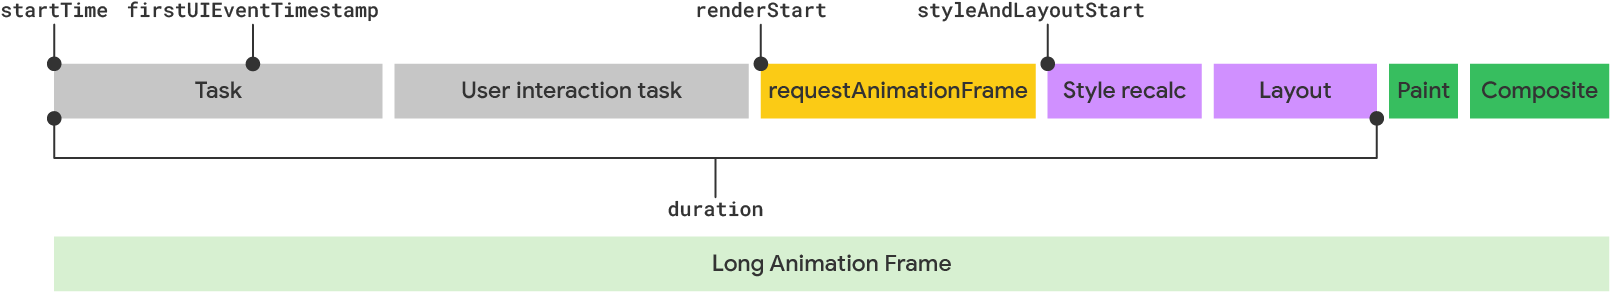 Визуализация длинного кадра анимации по модели LoAF.